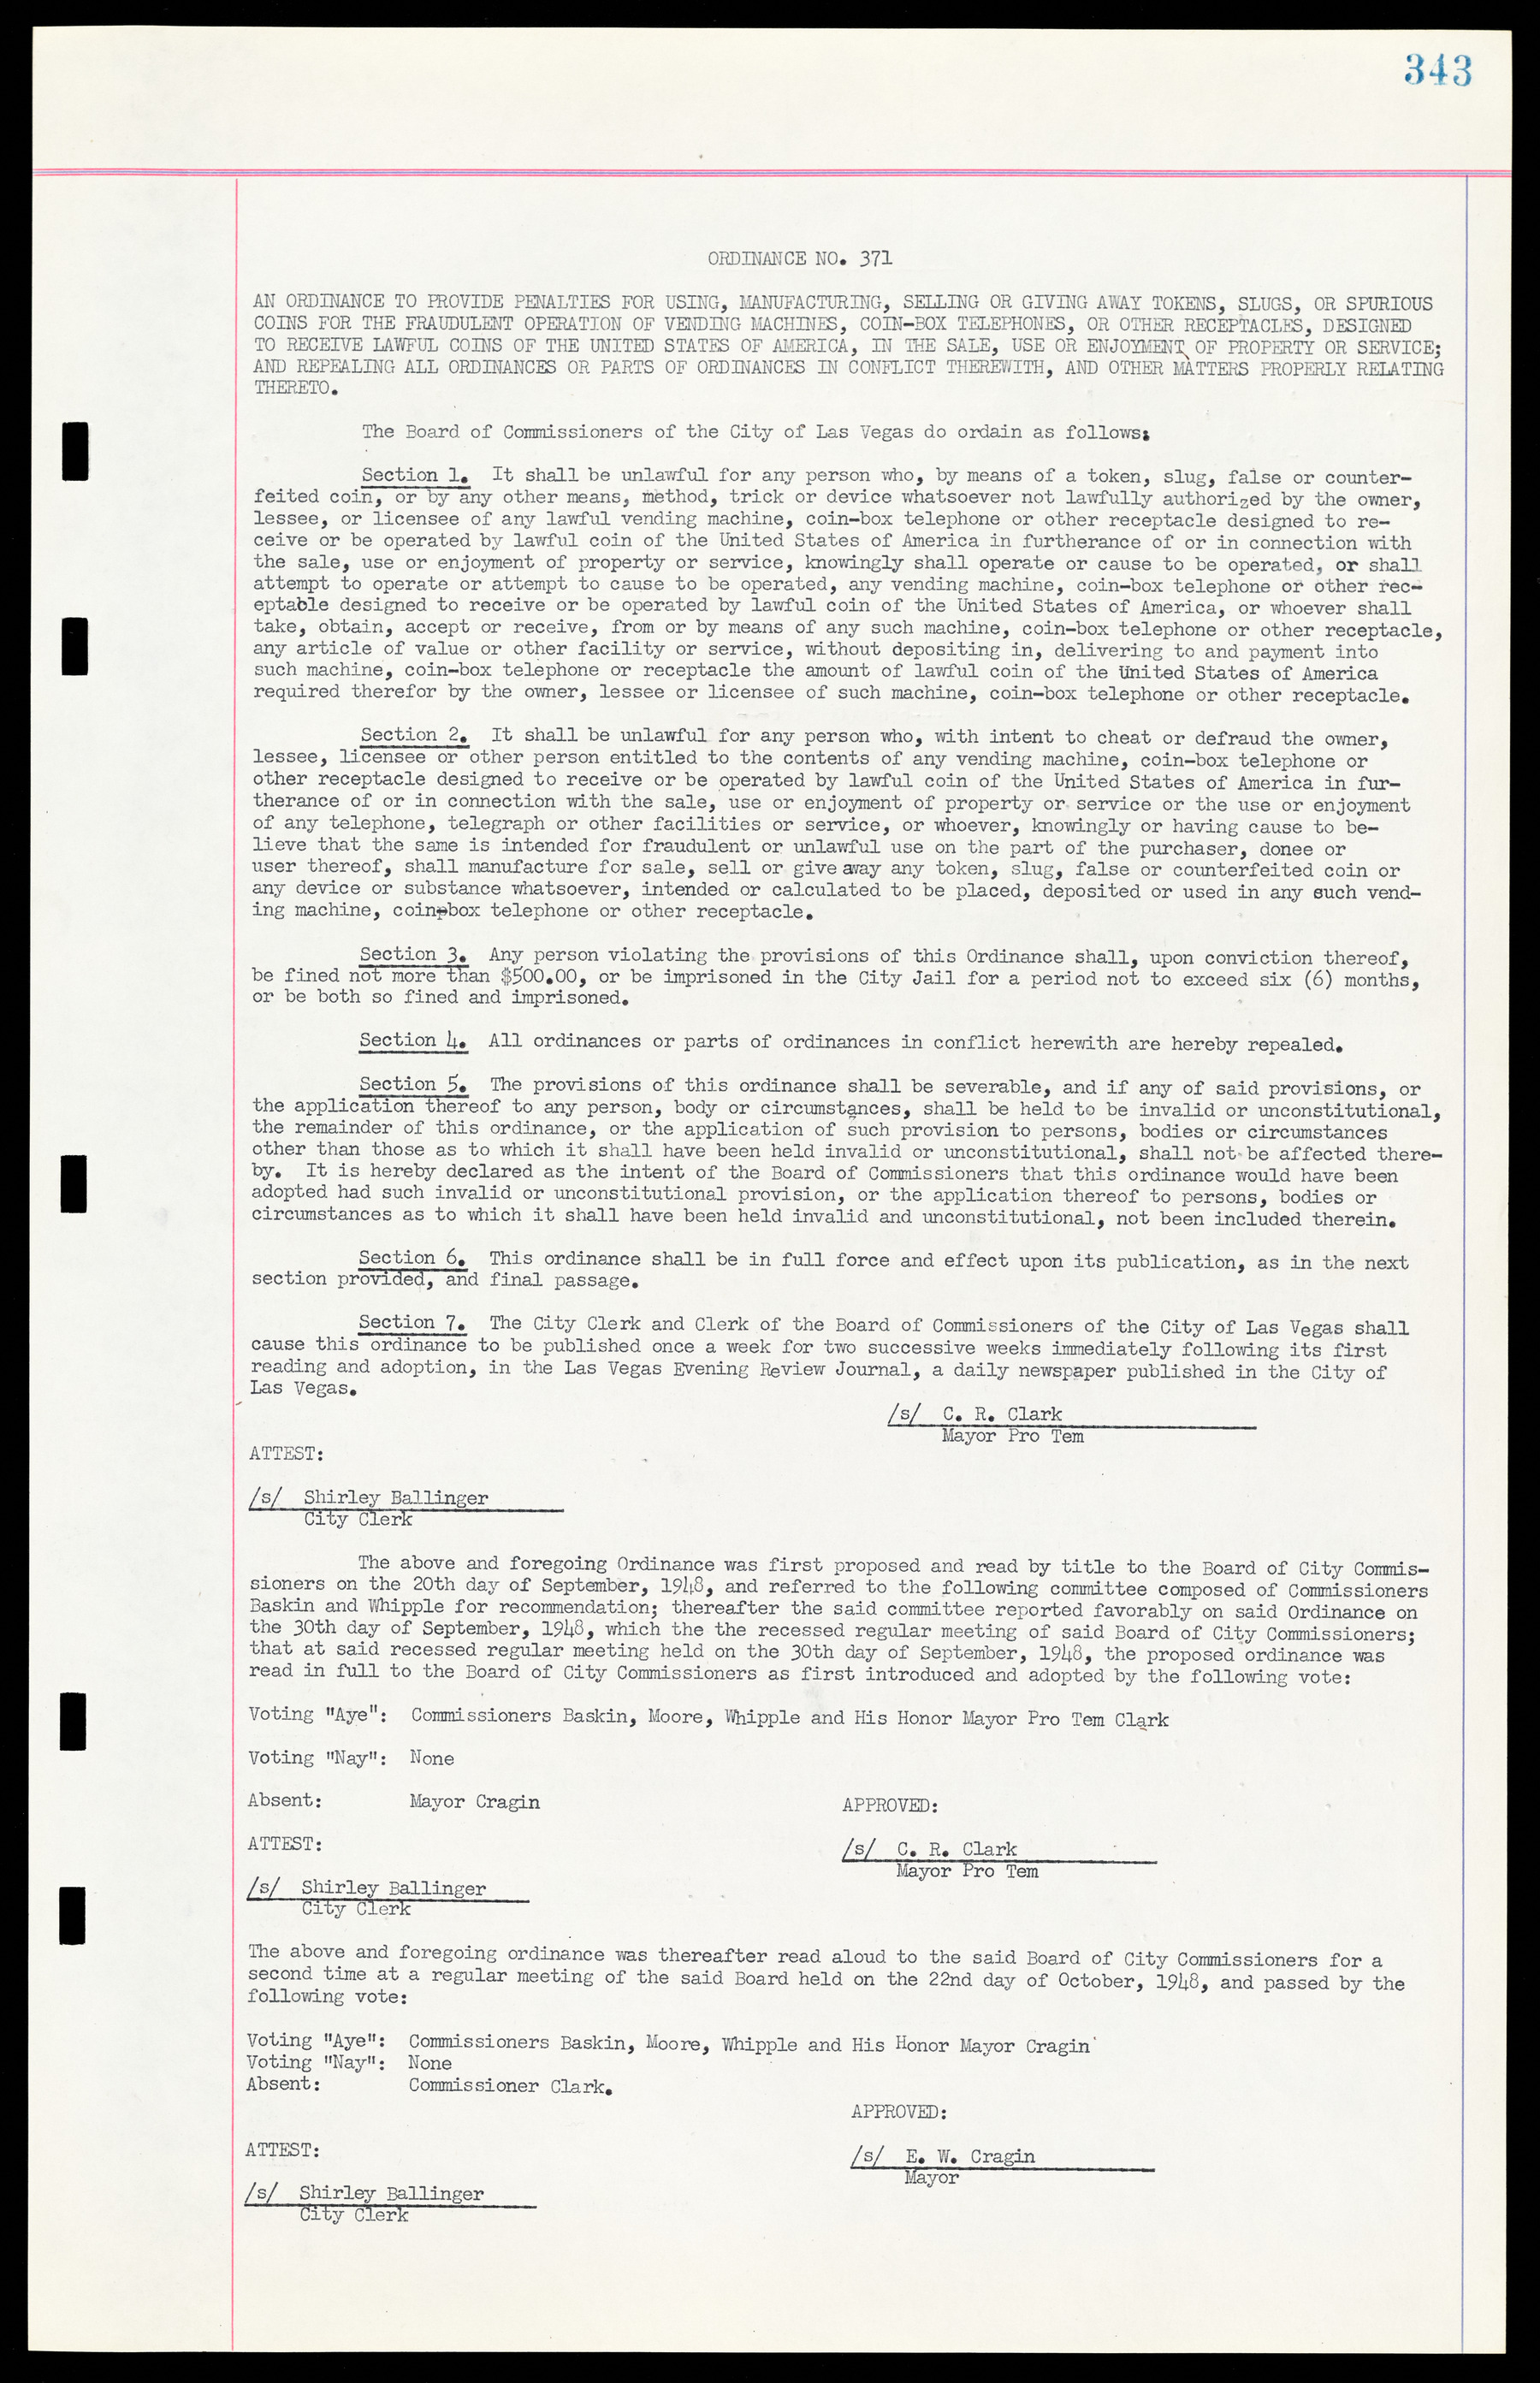 Las Vegas City Ordinances, March 31, 1933 to October 25, 1950, lvc000014-372